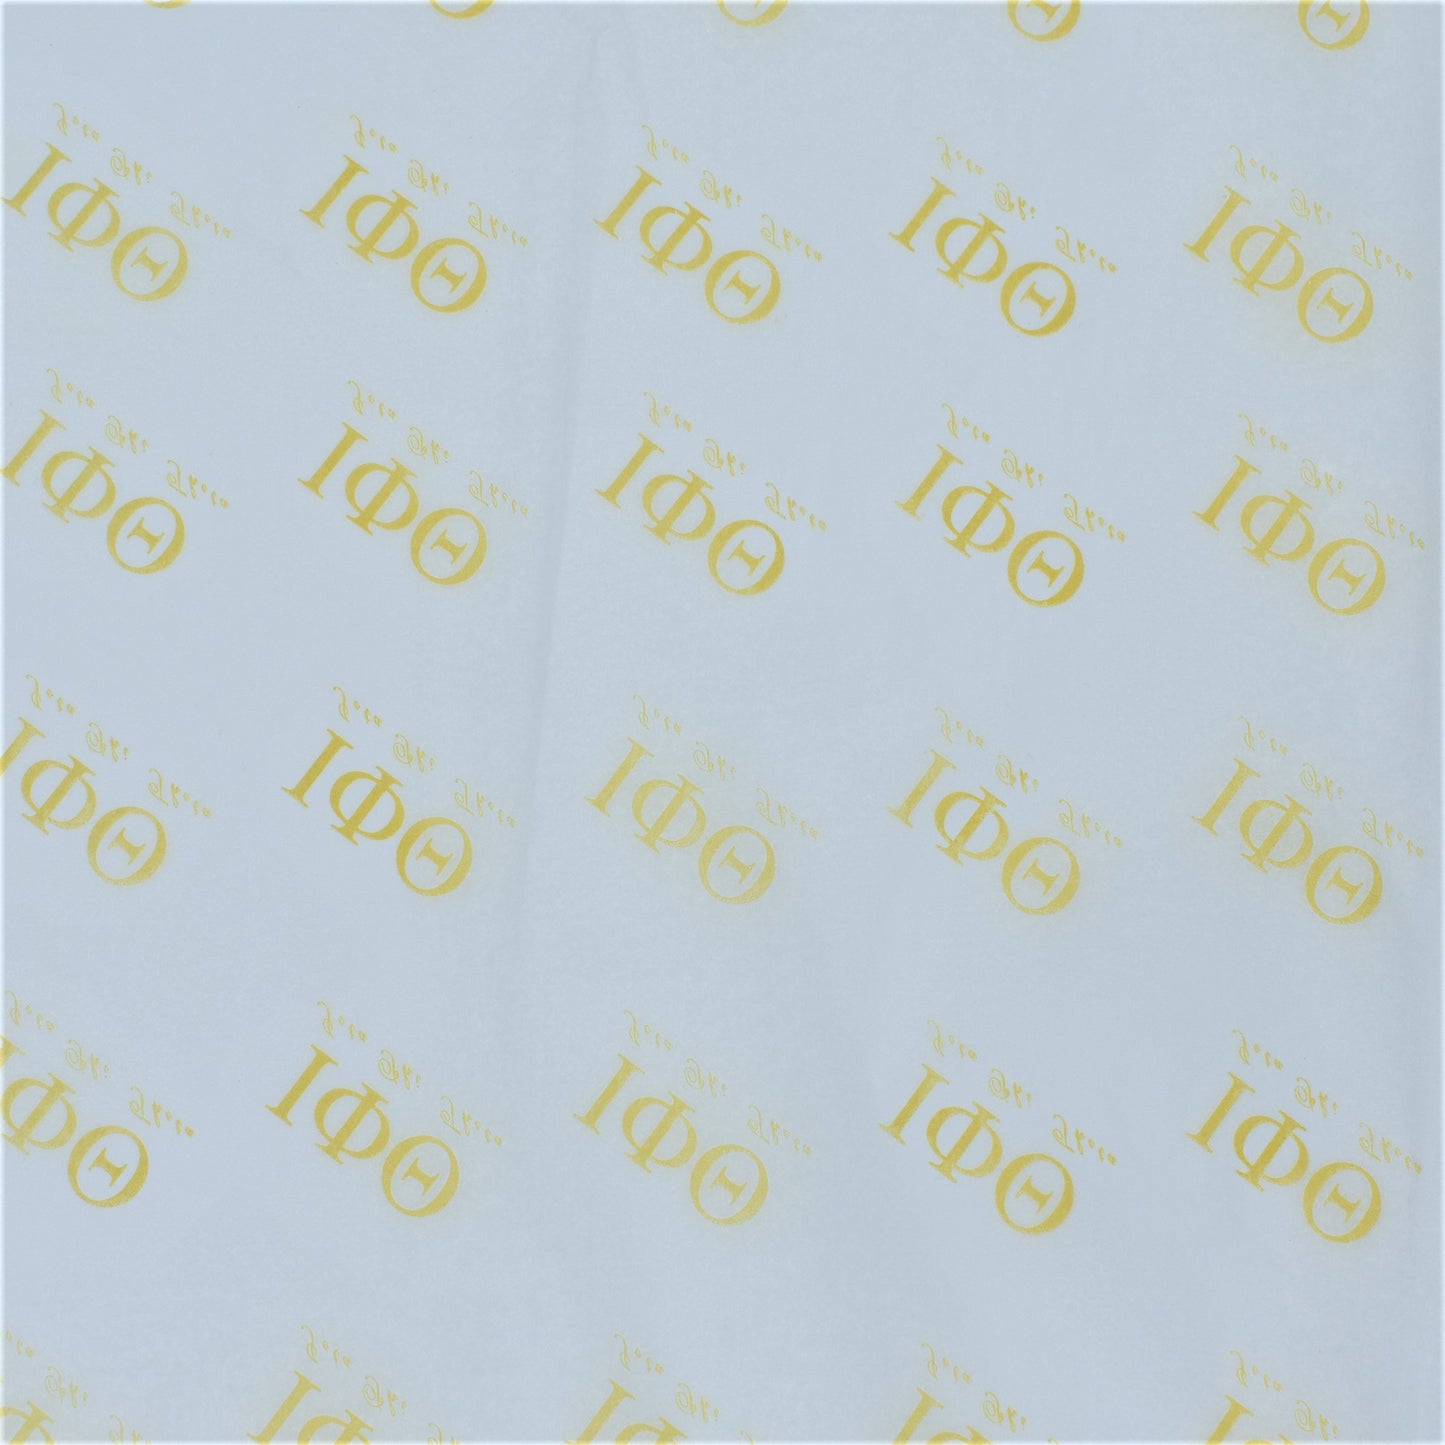 Iota Phi Theta Gift Tissue Paper ( 10 XL sheets)